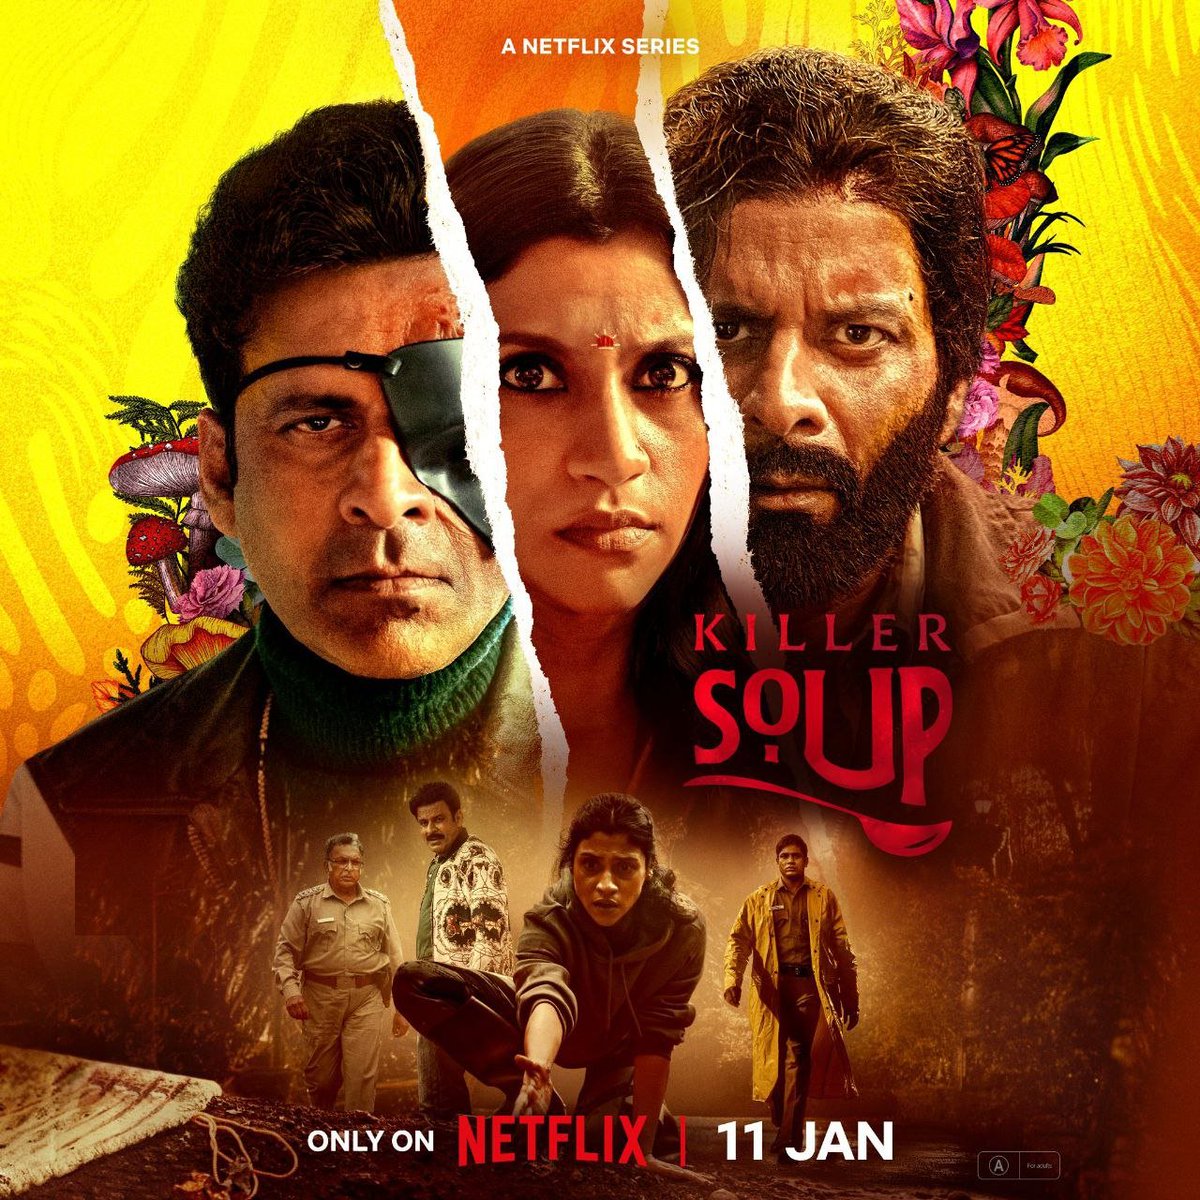 🔥 STREAMING ALERT!!

🍲 #KillerSoup – A Netflix Original Indian Hindi-Language Black Comedy Crime Mystery Thriller Drama Series

📁 S1 (All 8 Episodes)

🌟 Now Streaming On #Netflix In #Hindi, #Tamil, #Telugu, #Malayalam & #English !!
 
#KillerSoupOnNetflix

Follow: @Webseries0